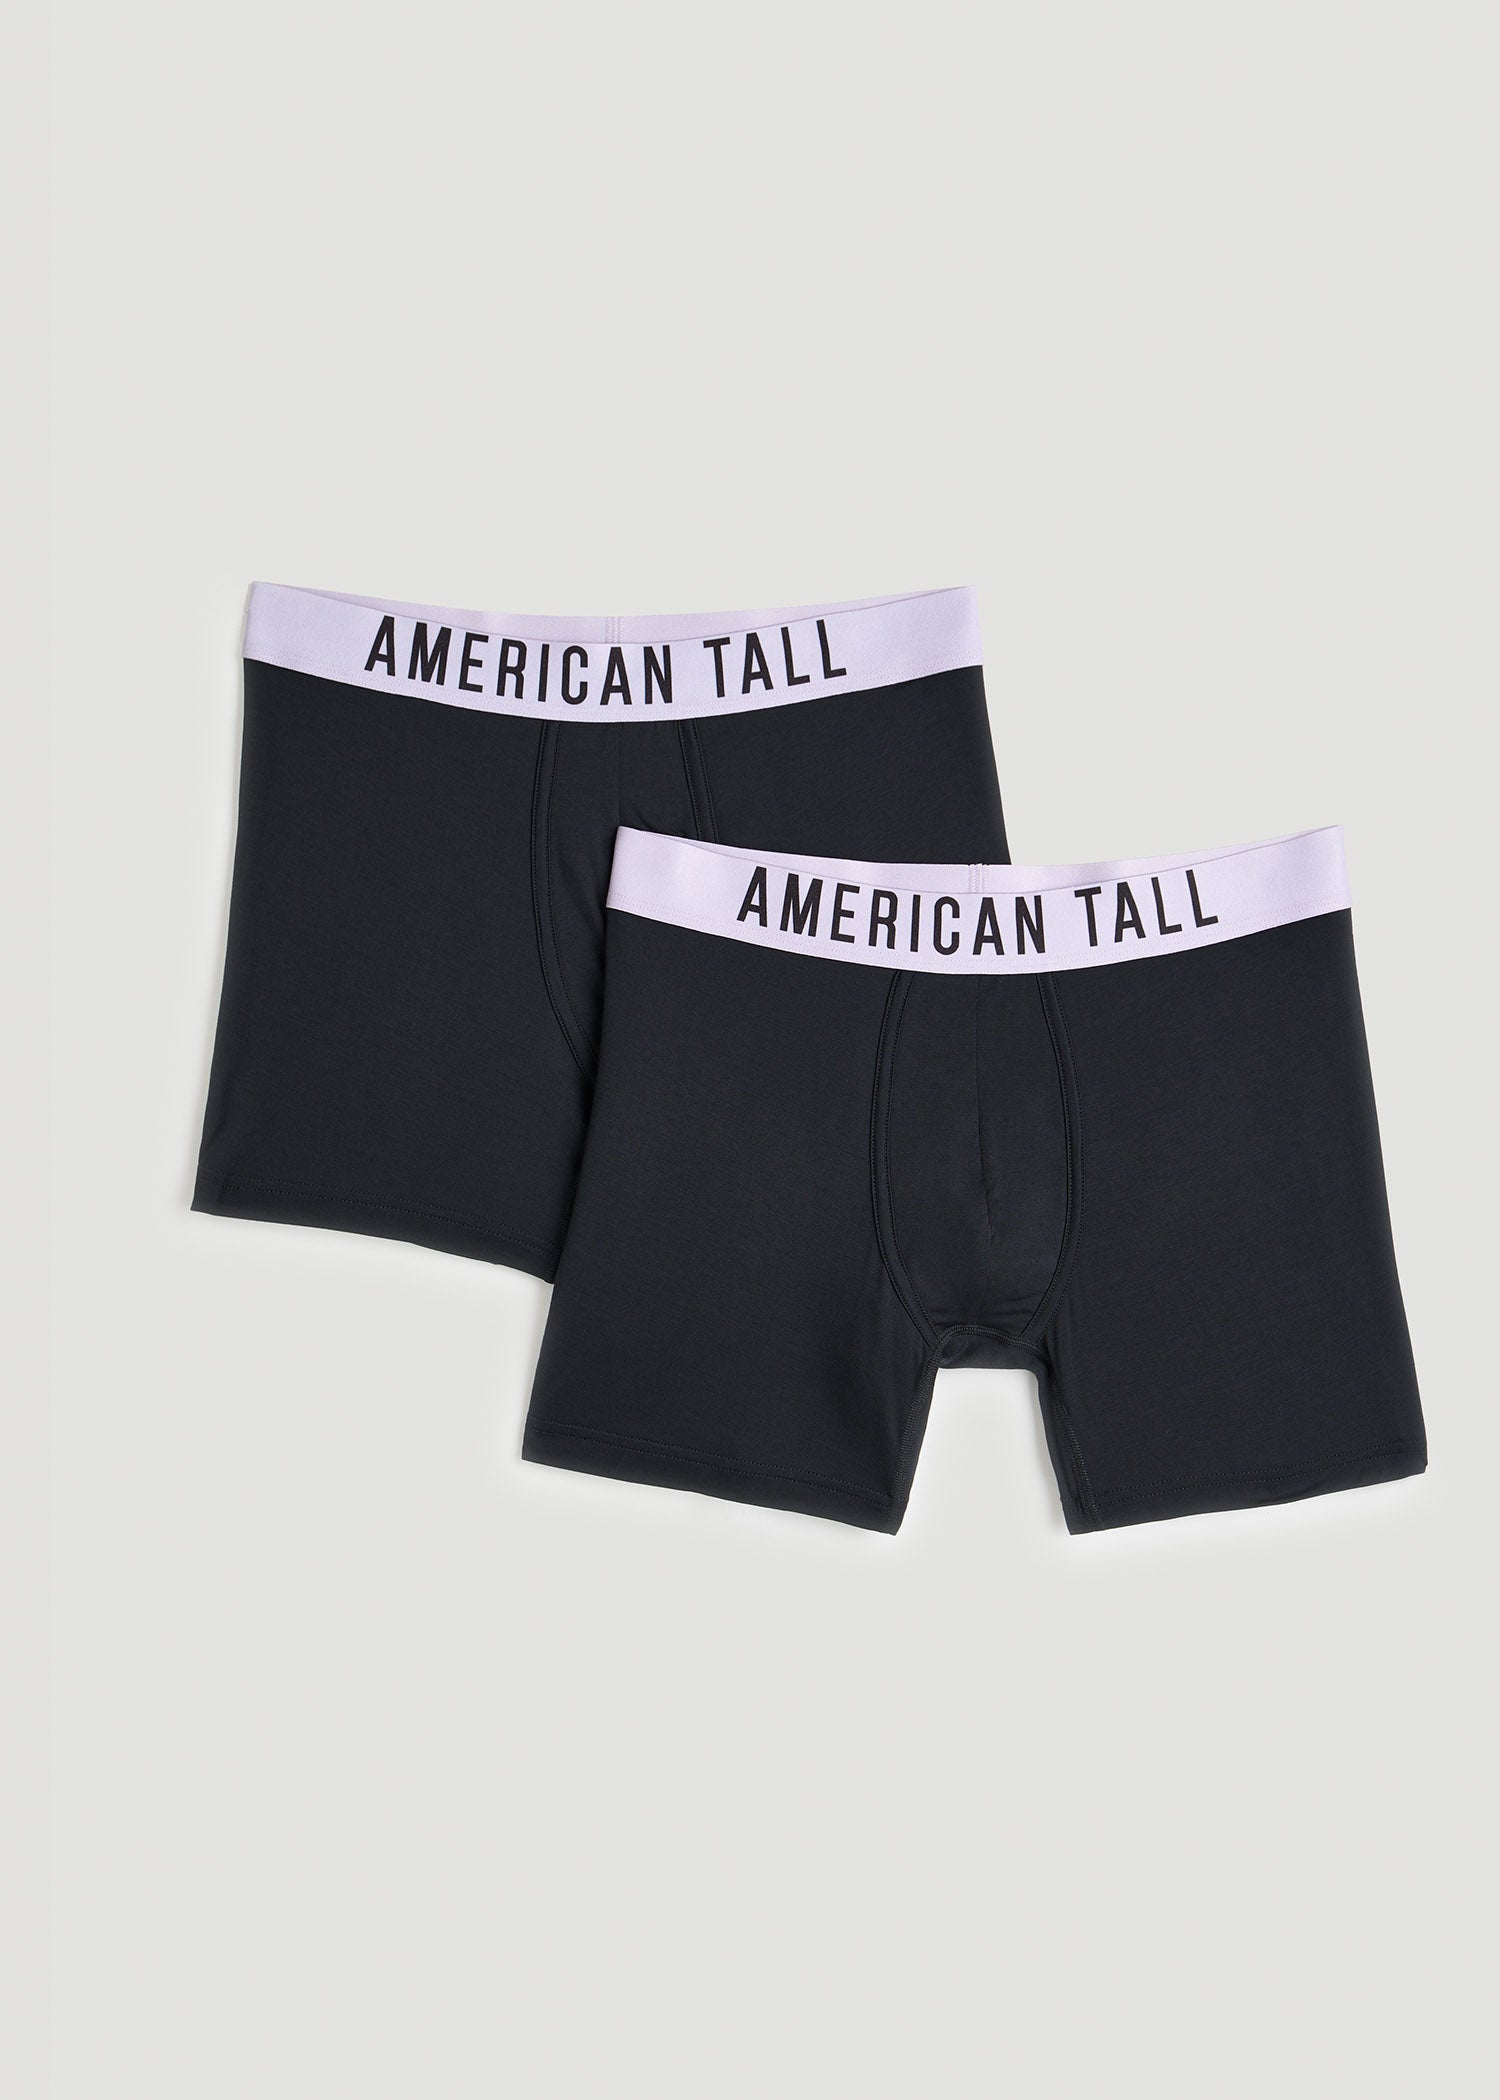 Athletic Works Men's Performance Boxer Briefs Underwear Size XL 3 Pack NEW